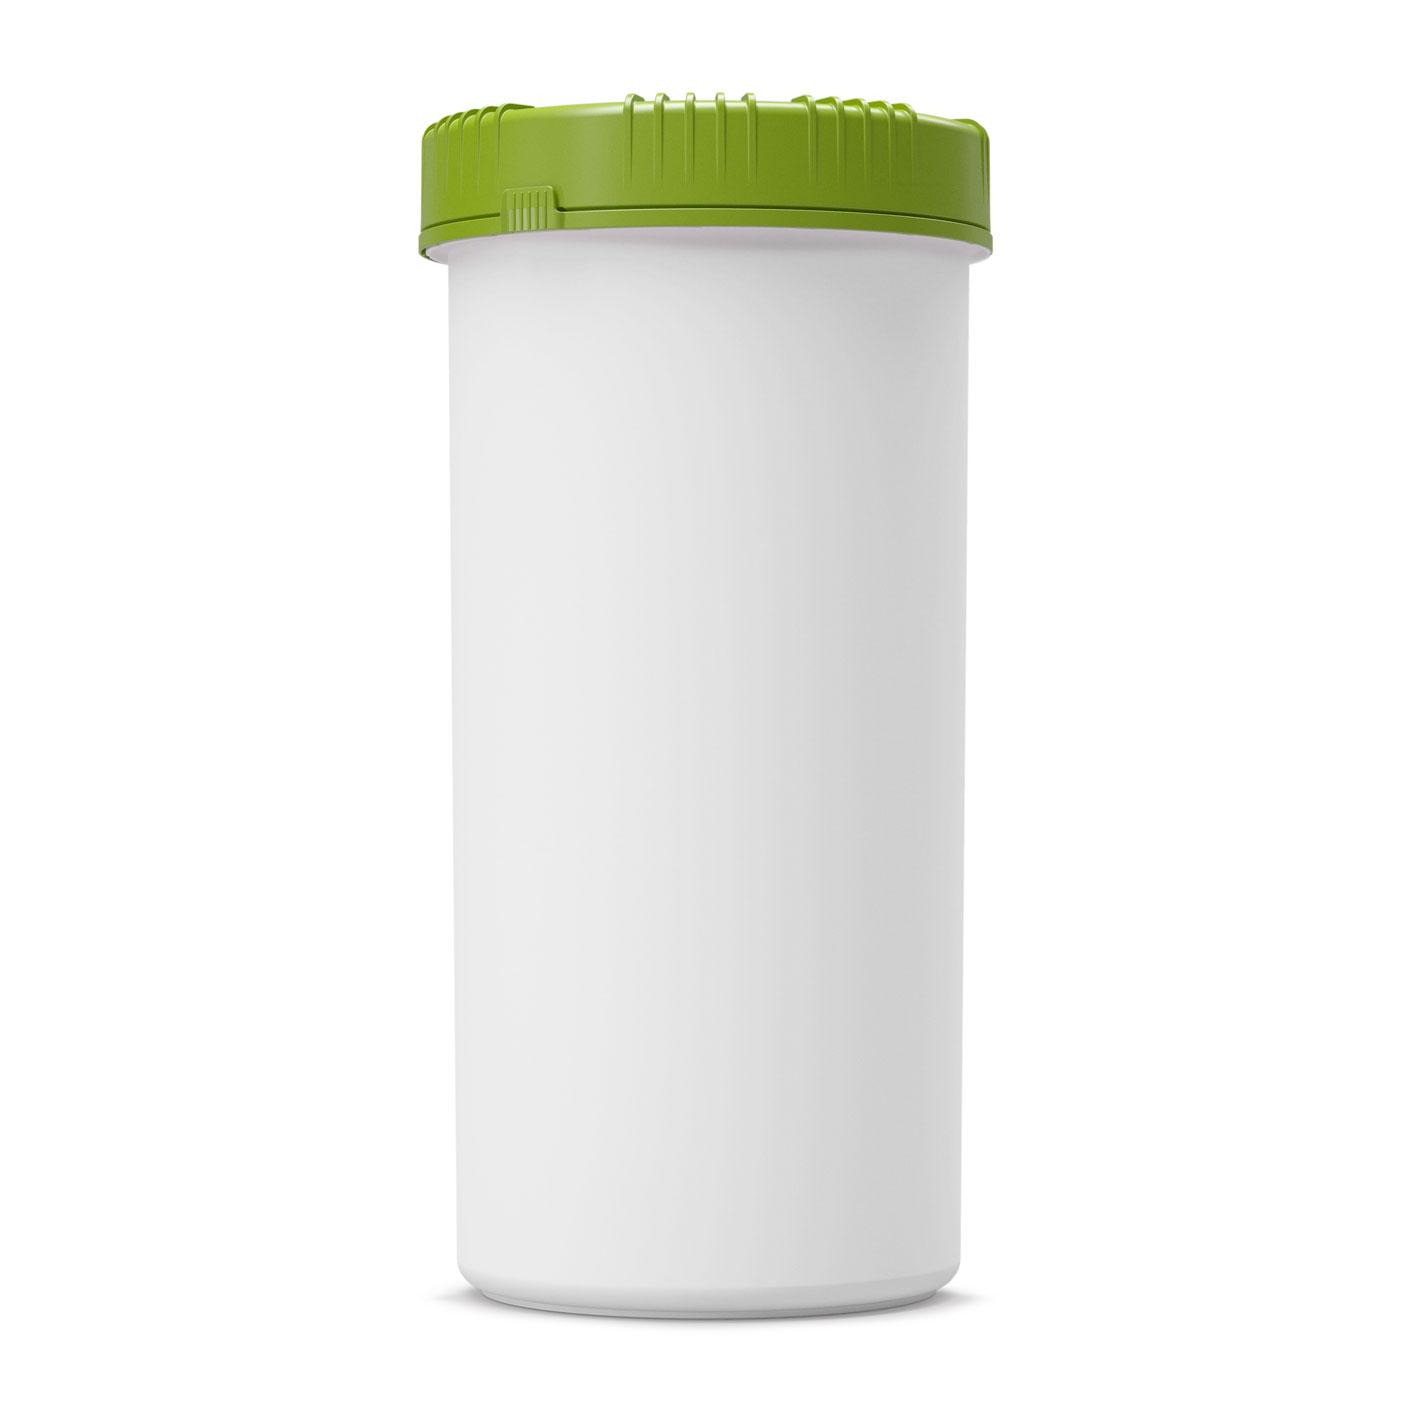 2500 ml Biobased Packo Jar